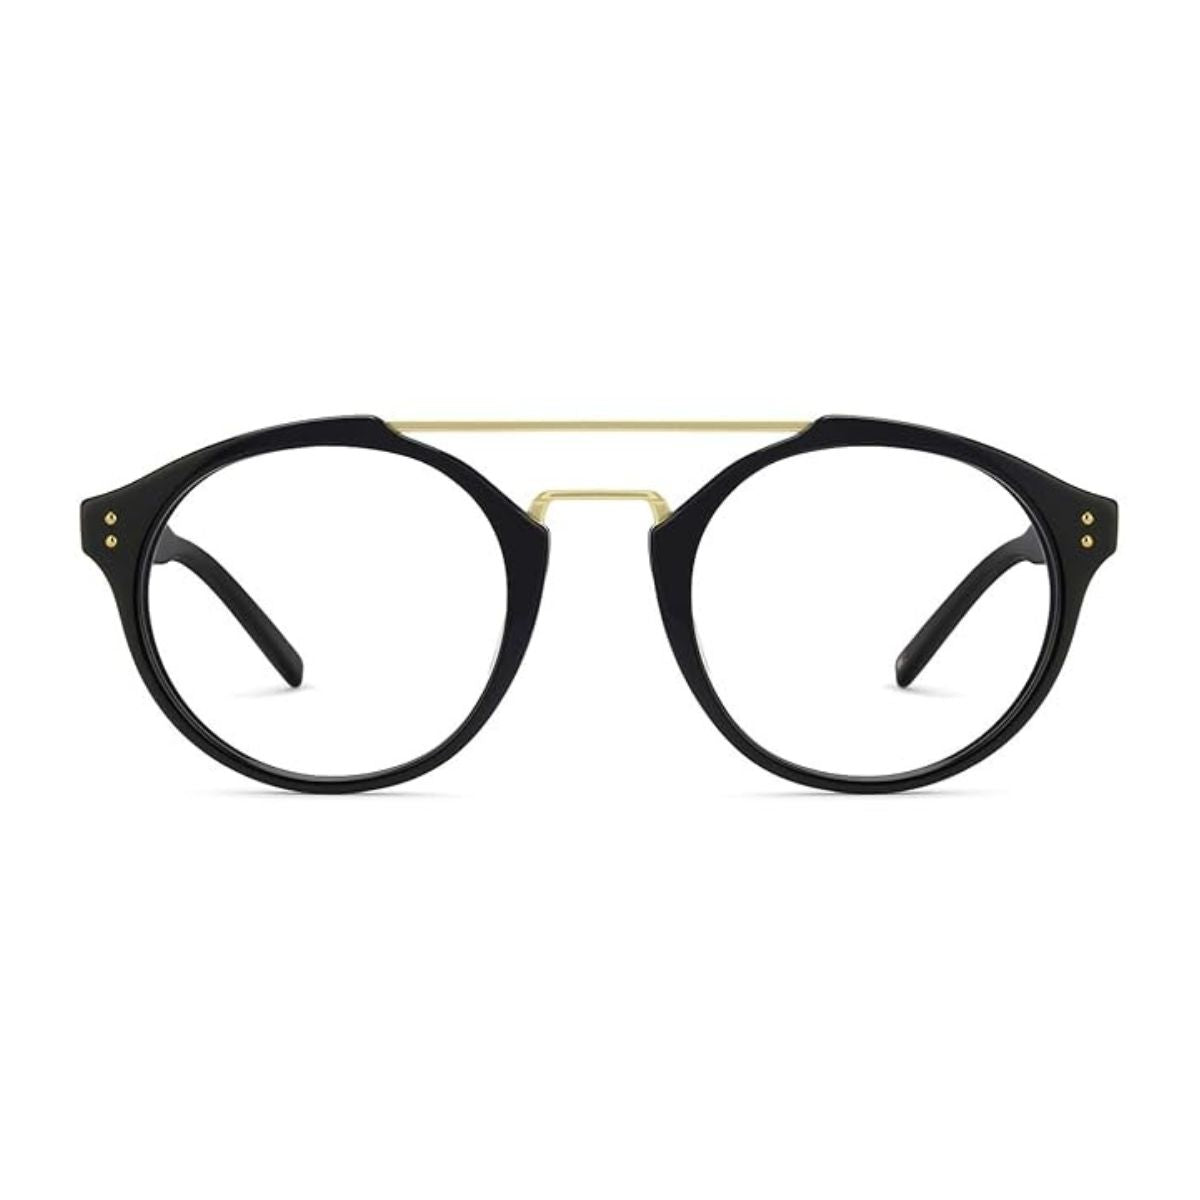 "best Tommy Hilfiger 6128 C2 eyesight & eyeglasses frame for women's at optorium"